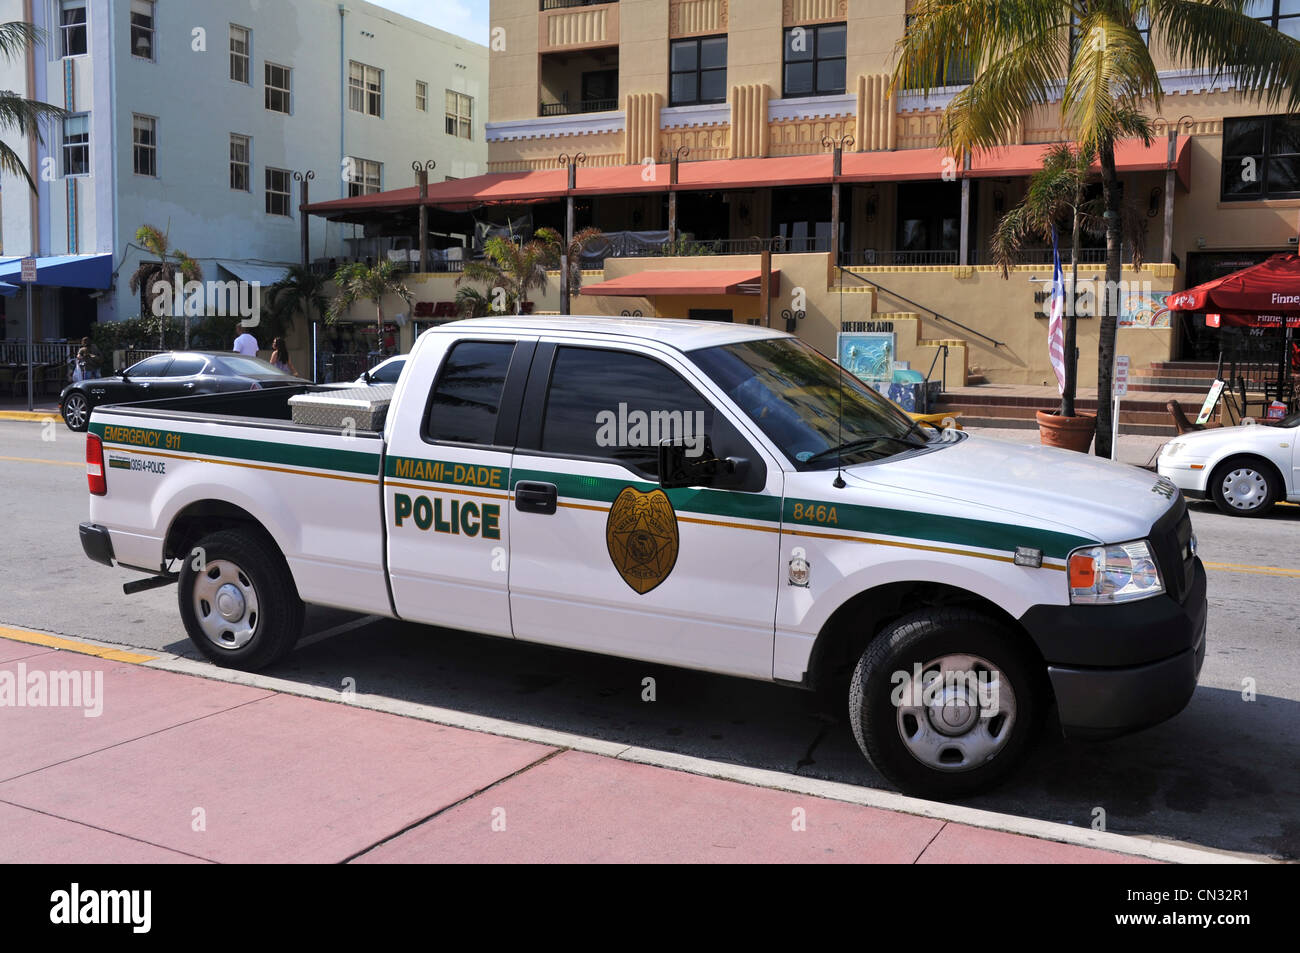 Miami Dade police truck, Miami, Florida, USA Stock Photo